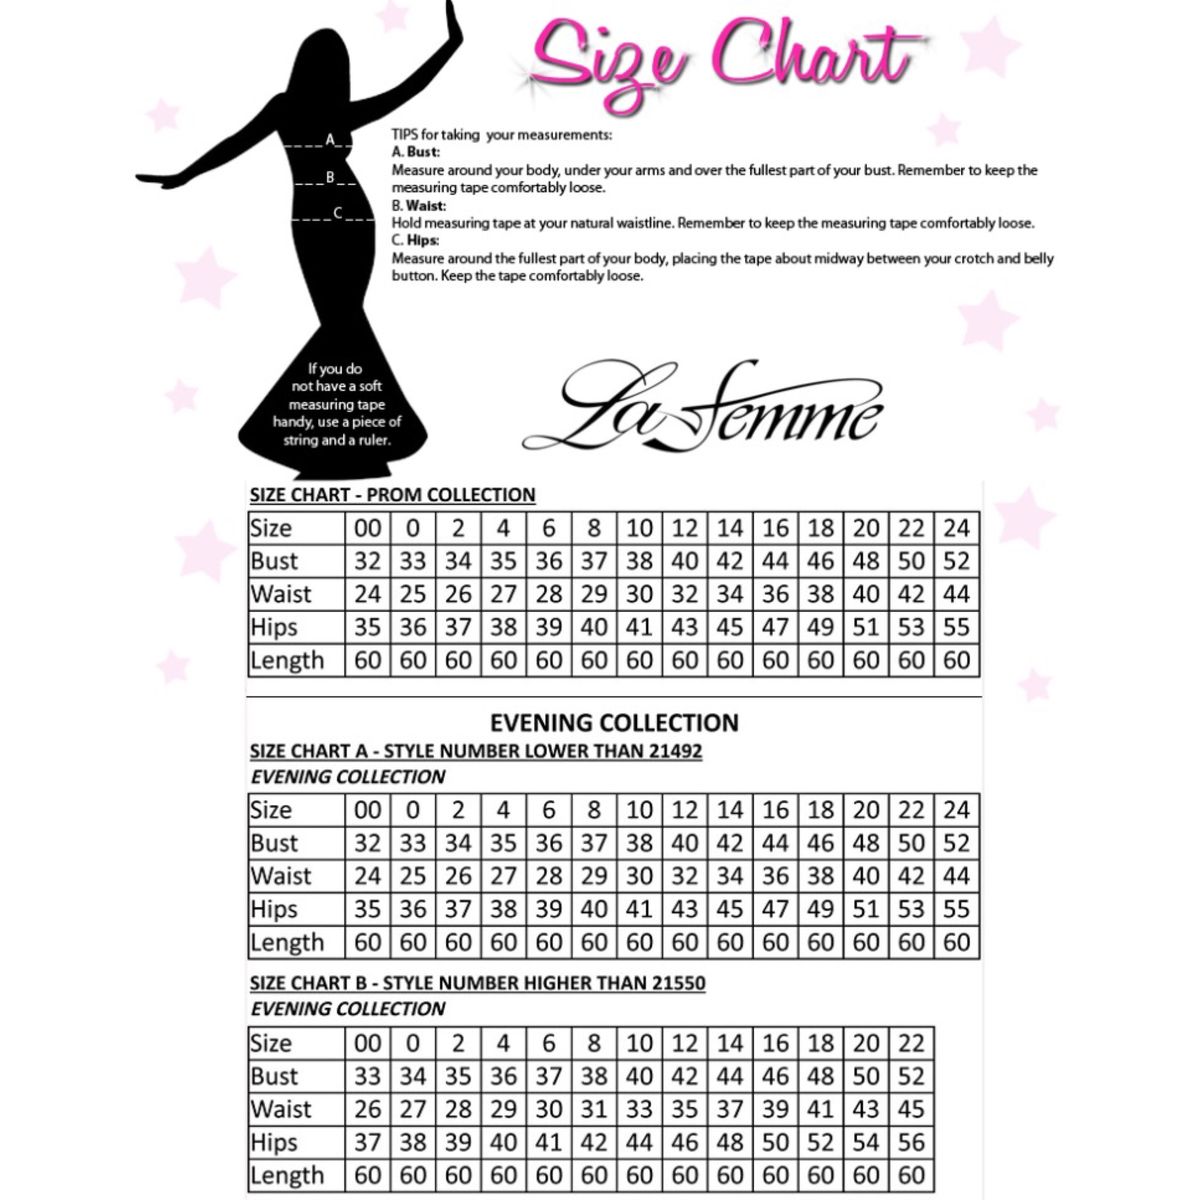 Style 24263 La Femme Size 2 Pink Side Slit Dress on Queenly